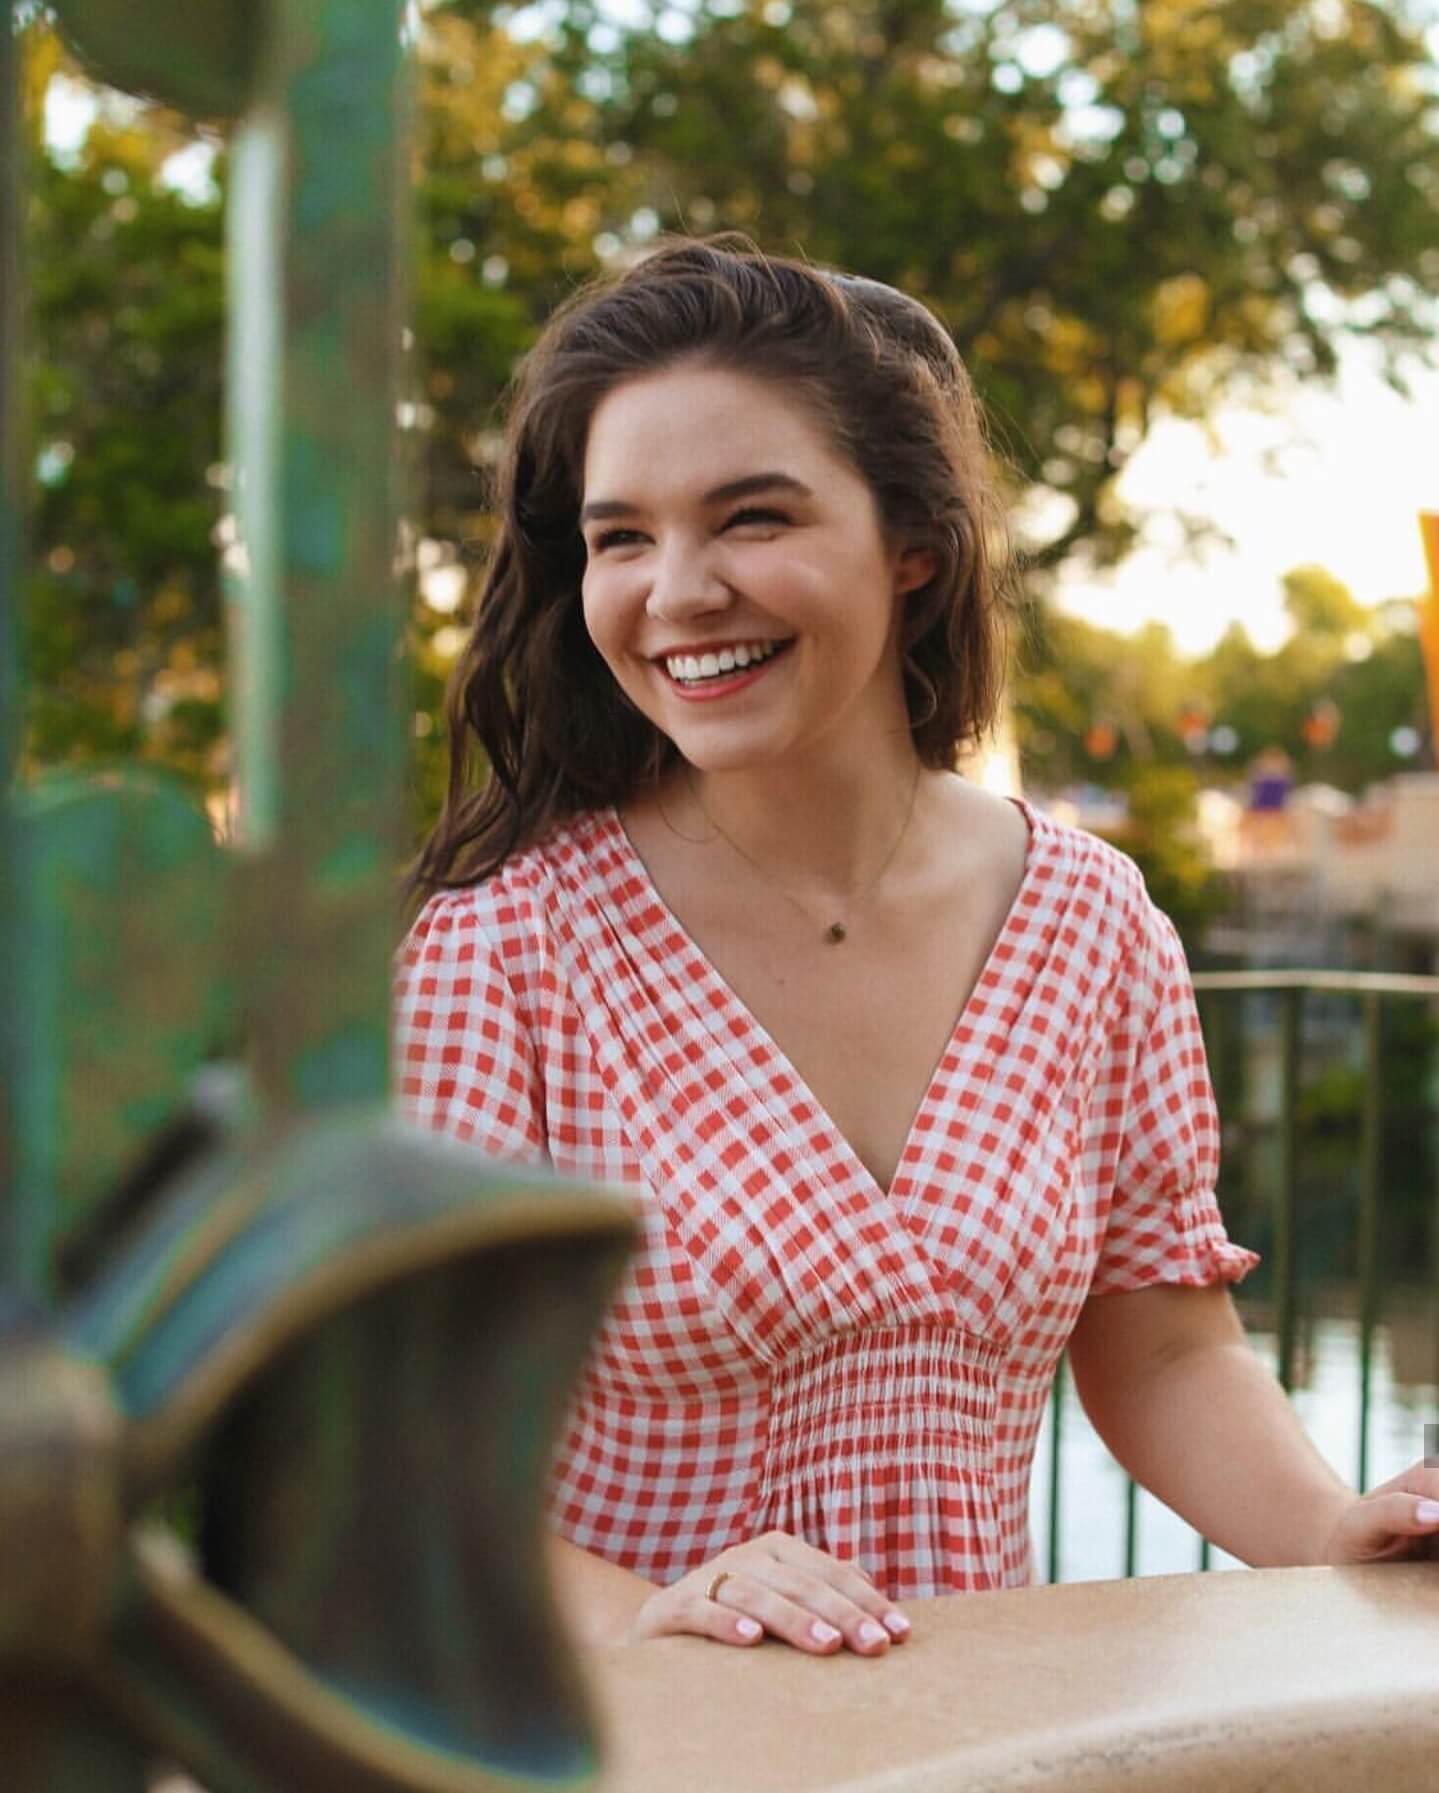 Madison-McLaughlin-beautiful smile